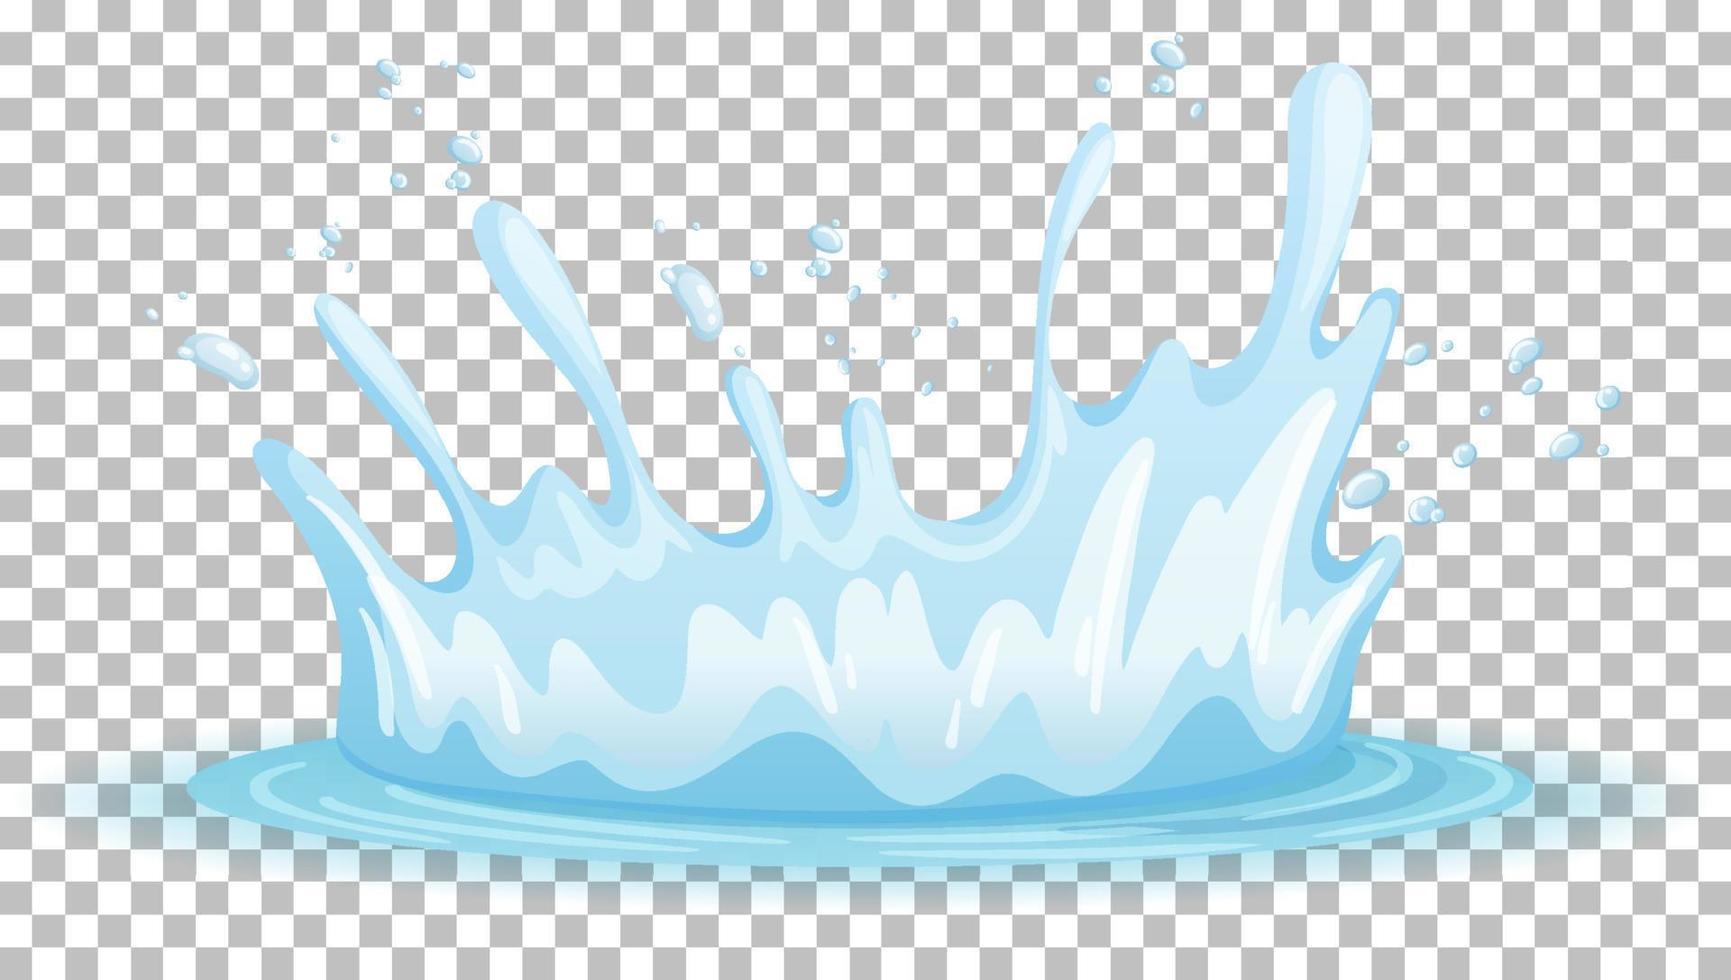 Water splash on grid background vector